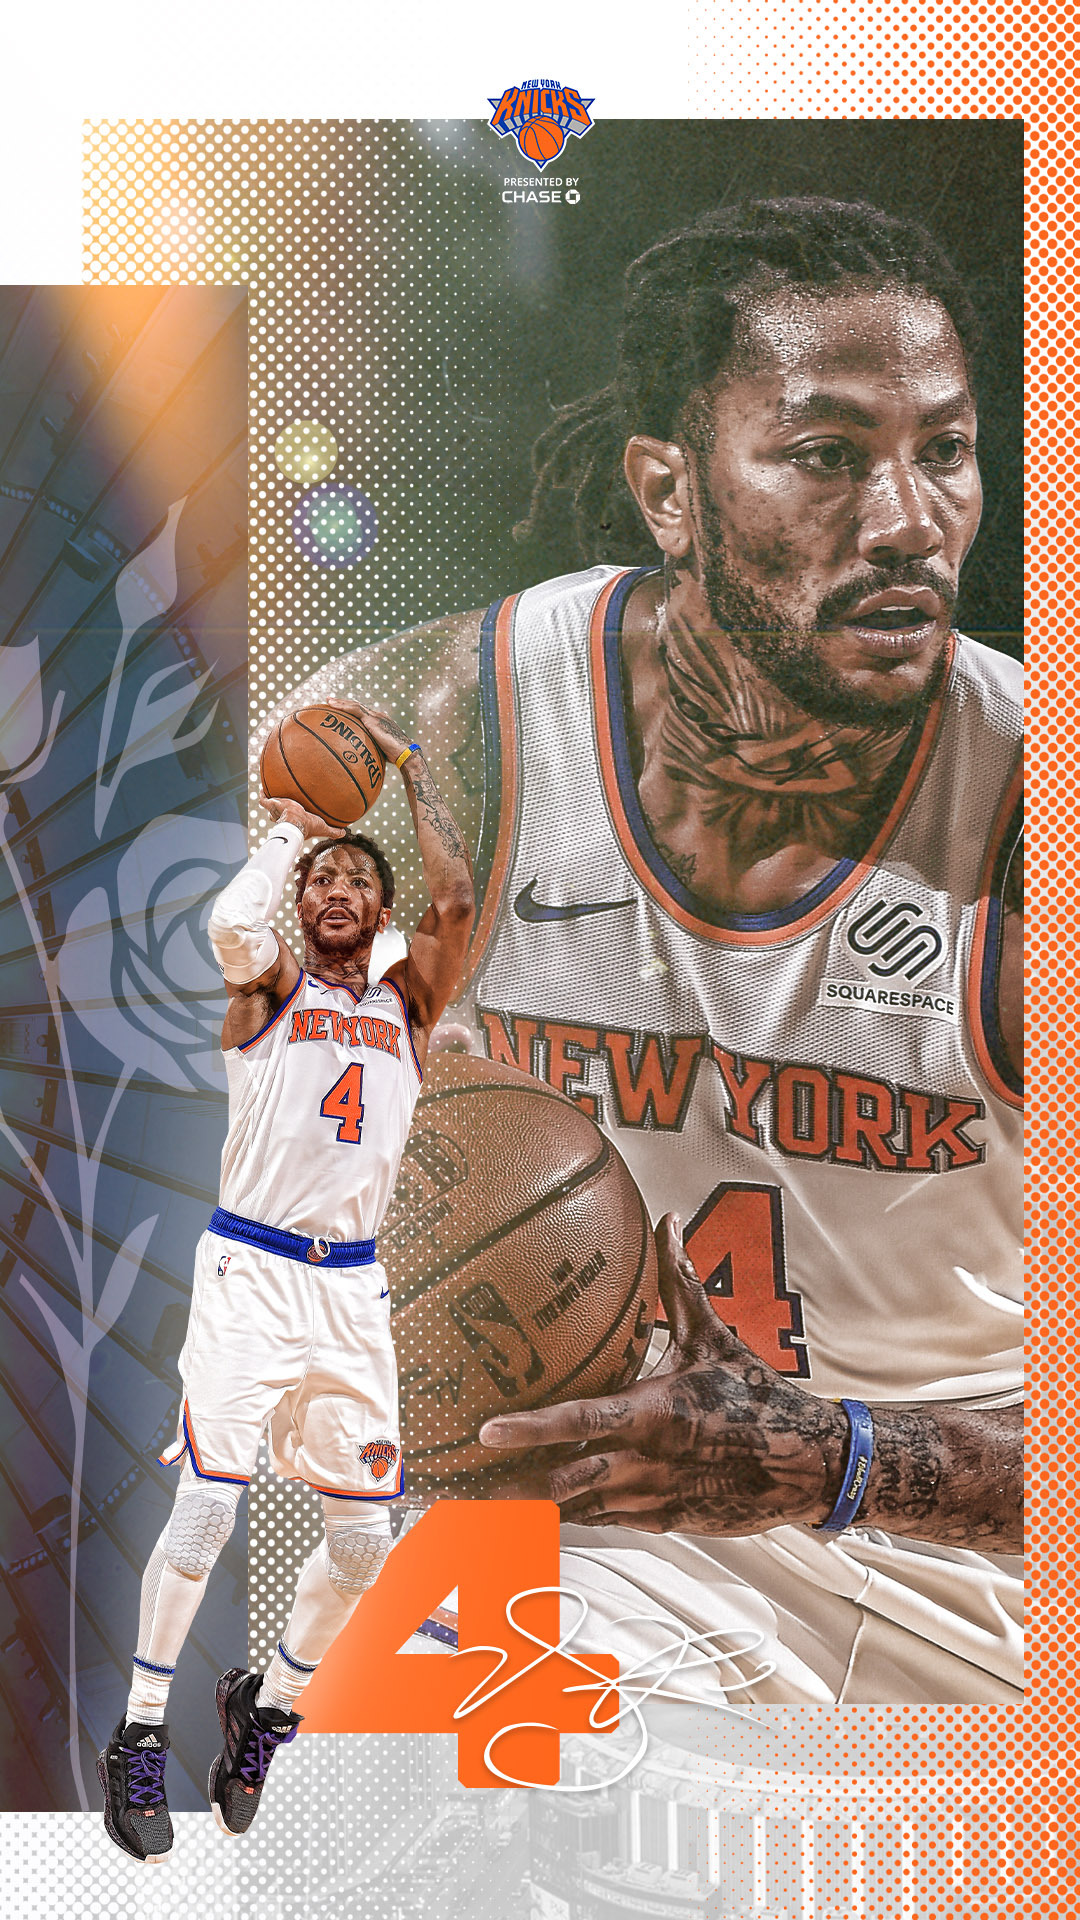 New York Knicks 2023 Wallpapers - Wallpaper Cave